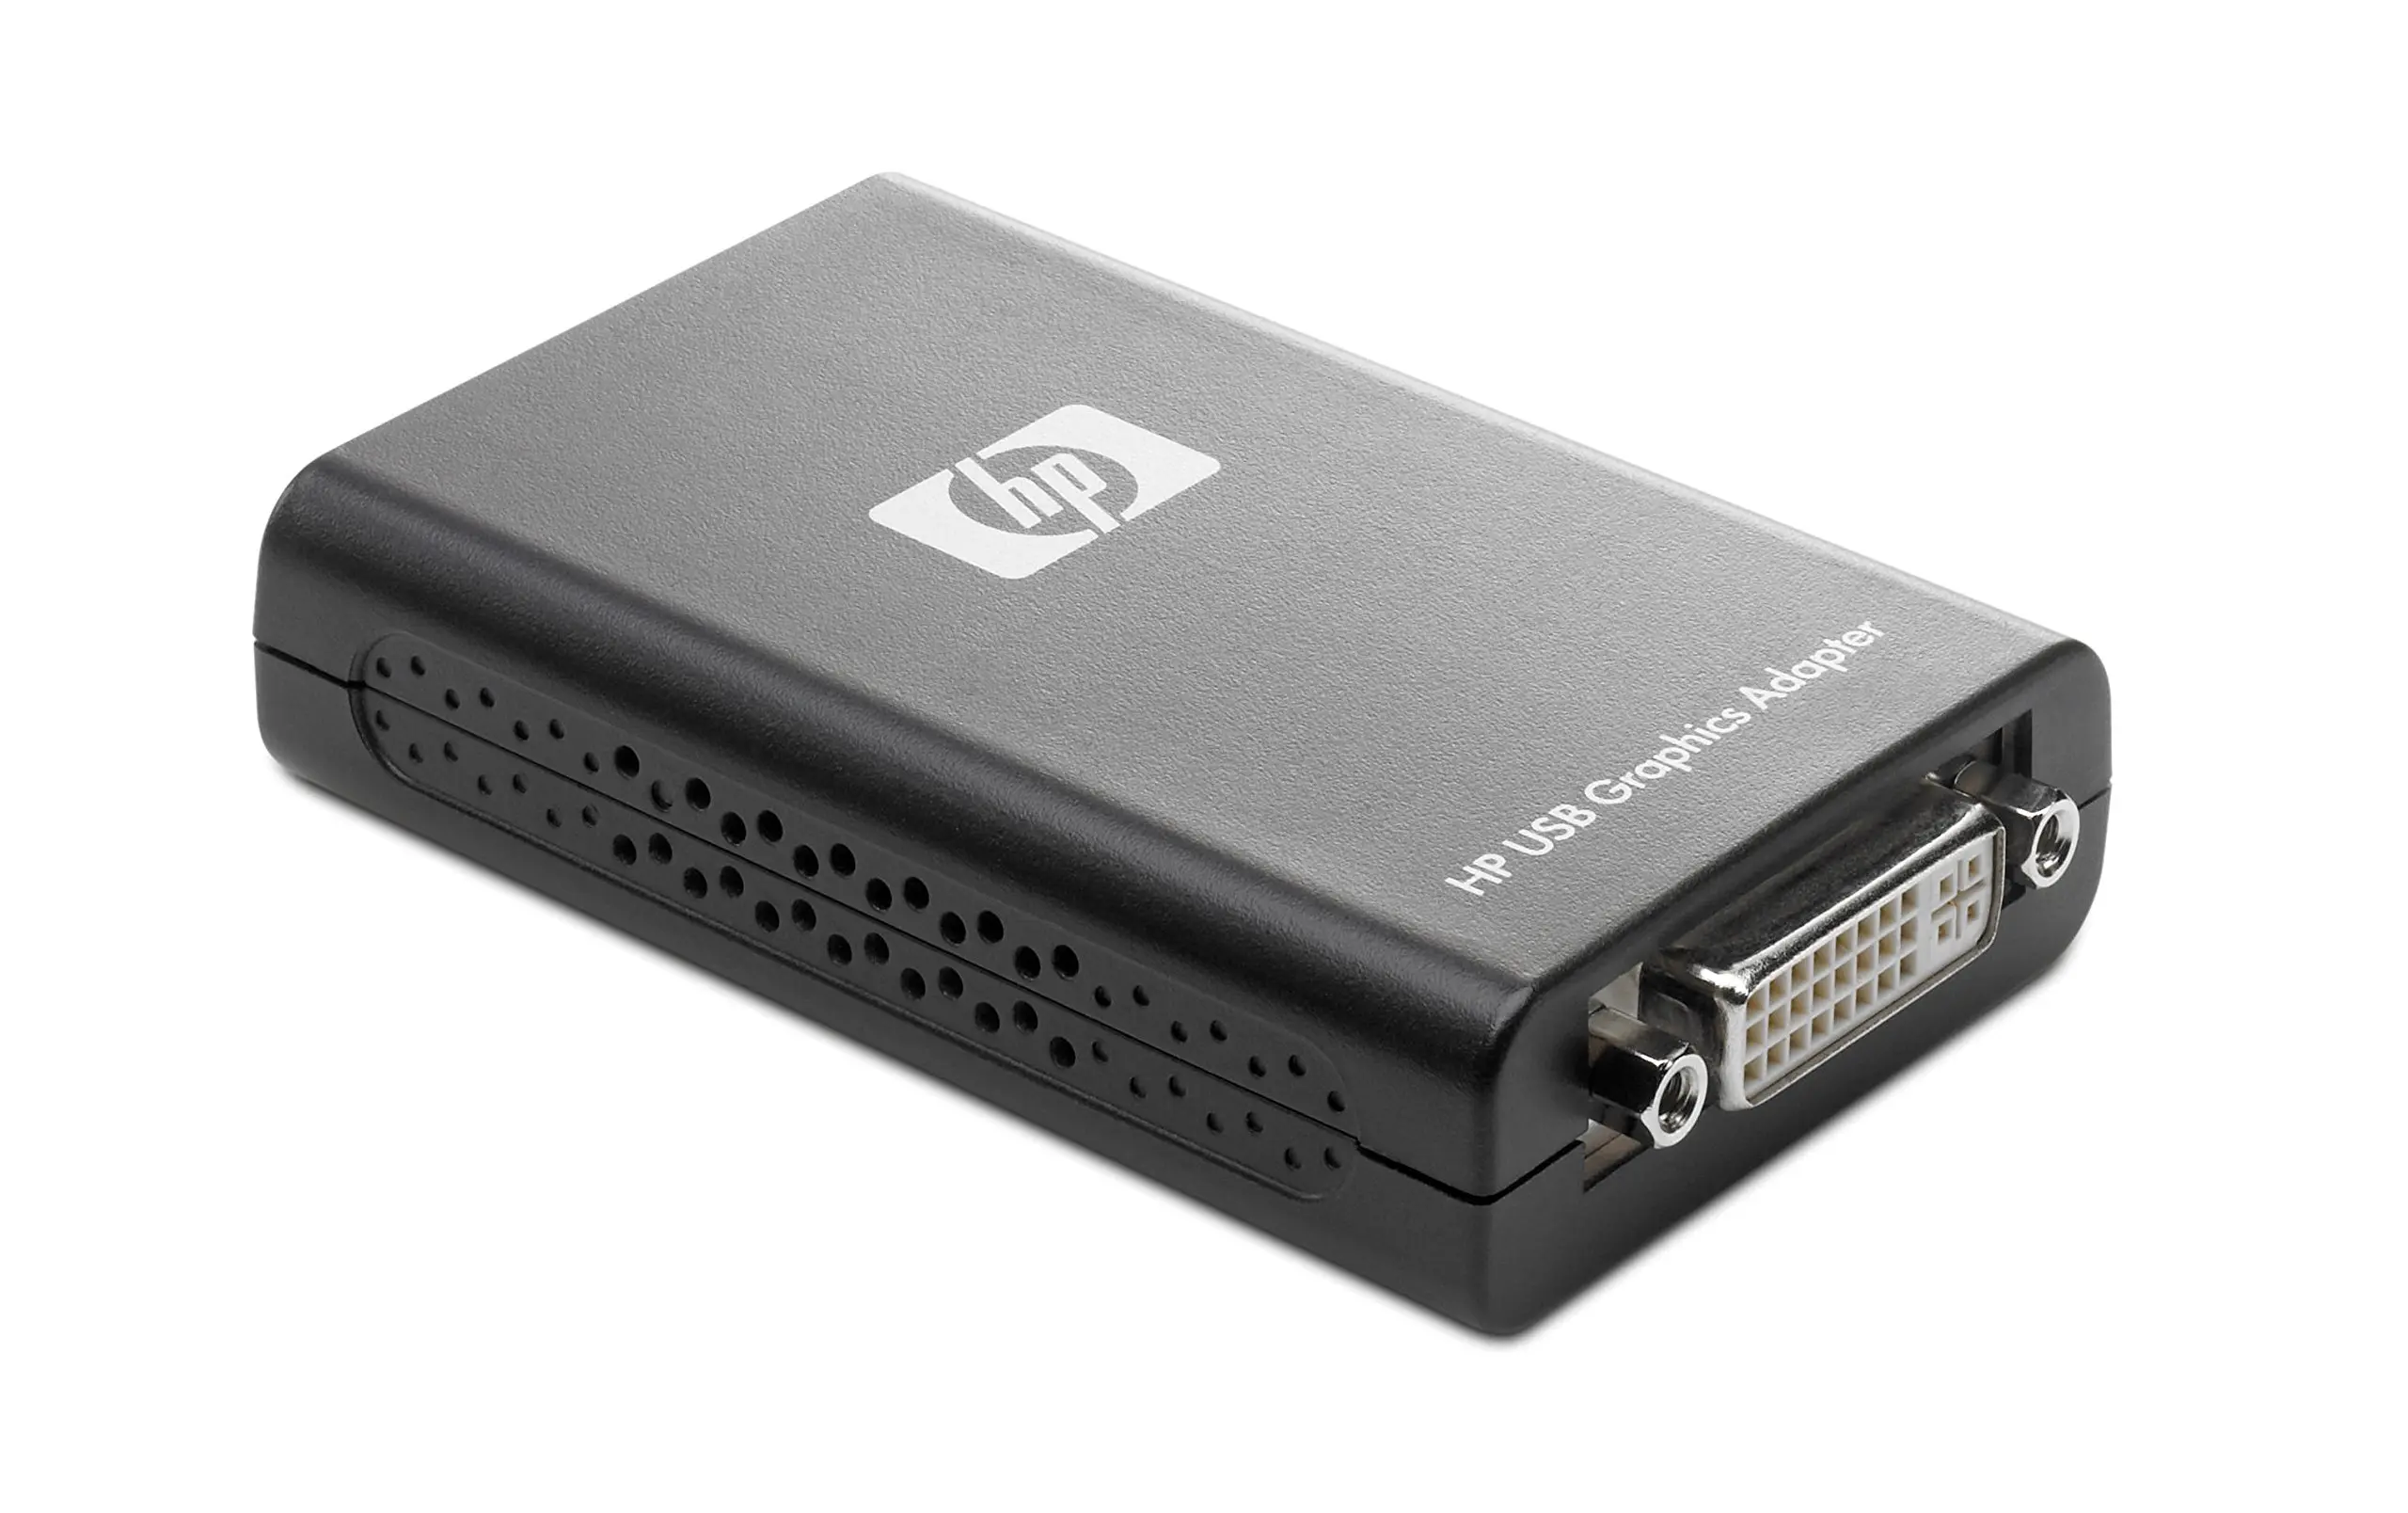 hewlett packard nl571aa - What is a HP USB Graphics Adapter